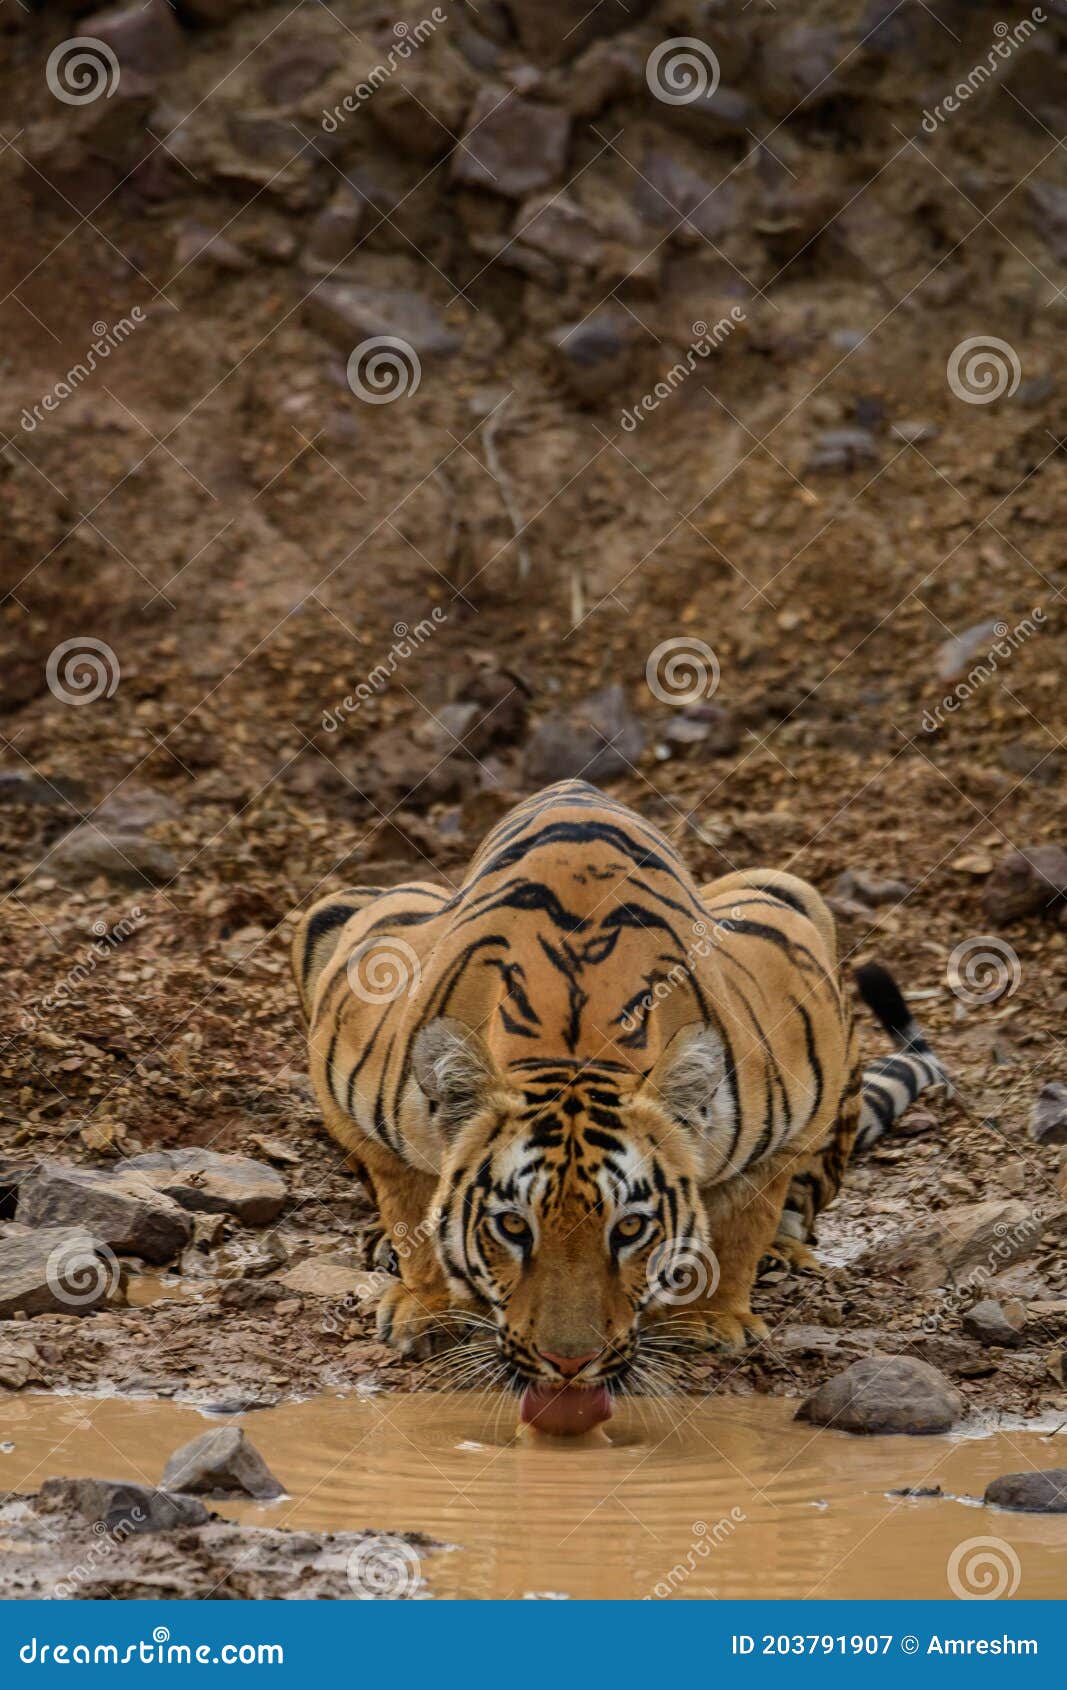 tigress drinking water